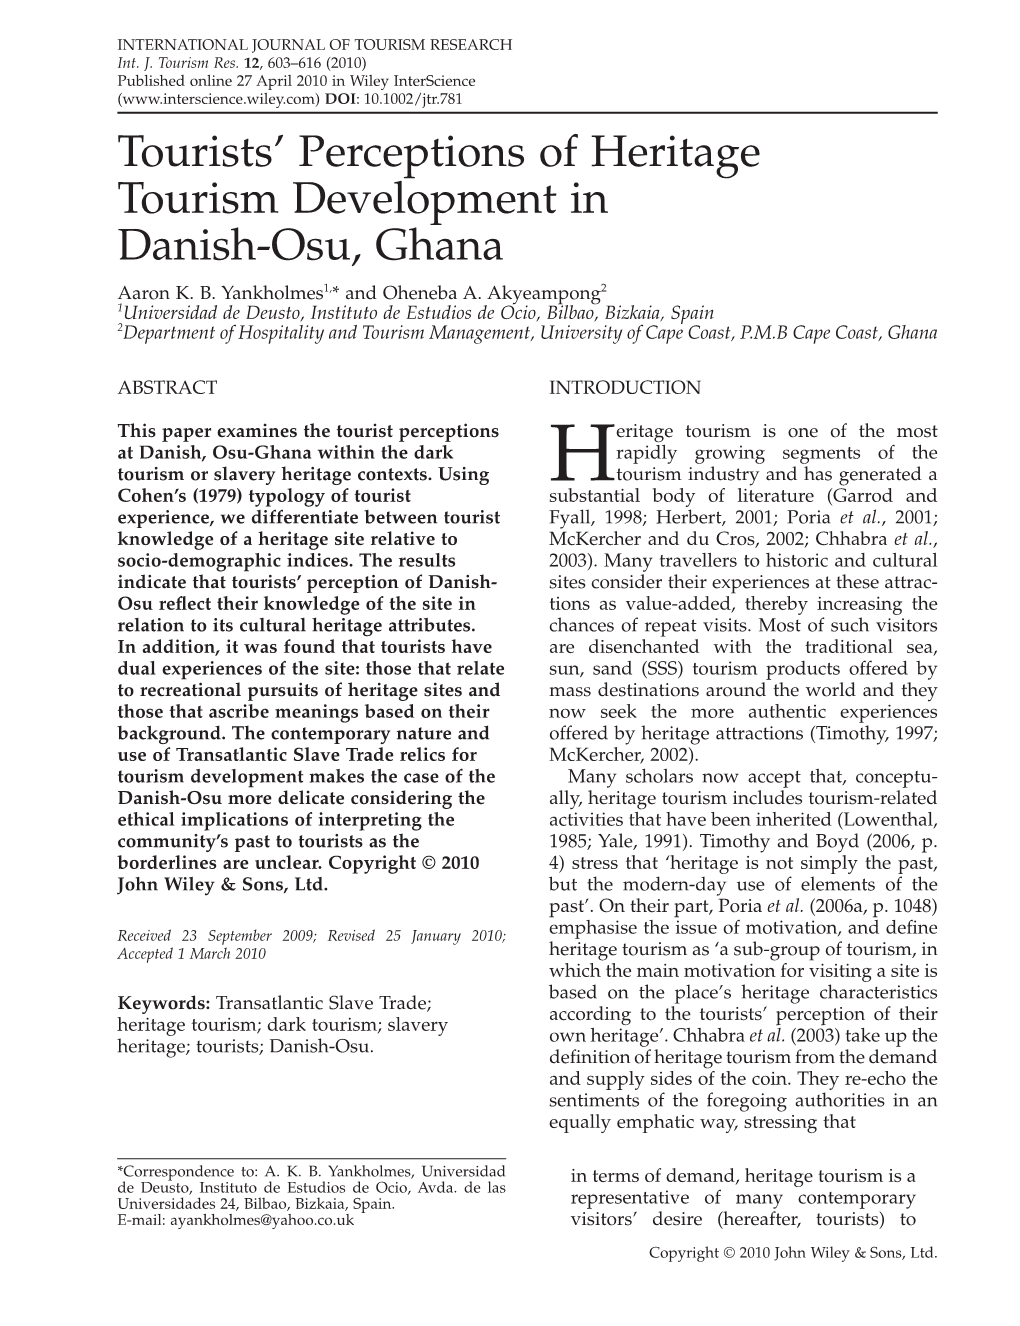 Tourists' Perceptions of Heritage Tourism Development in Danish?